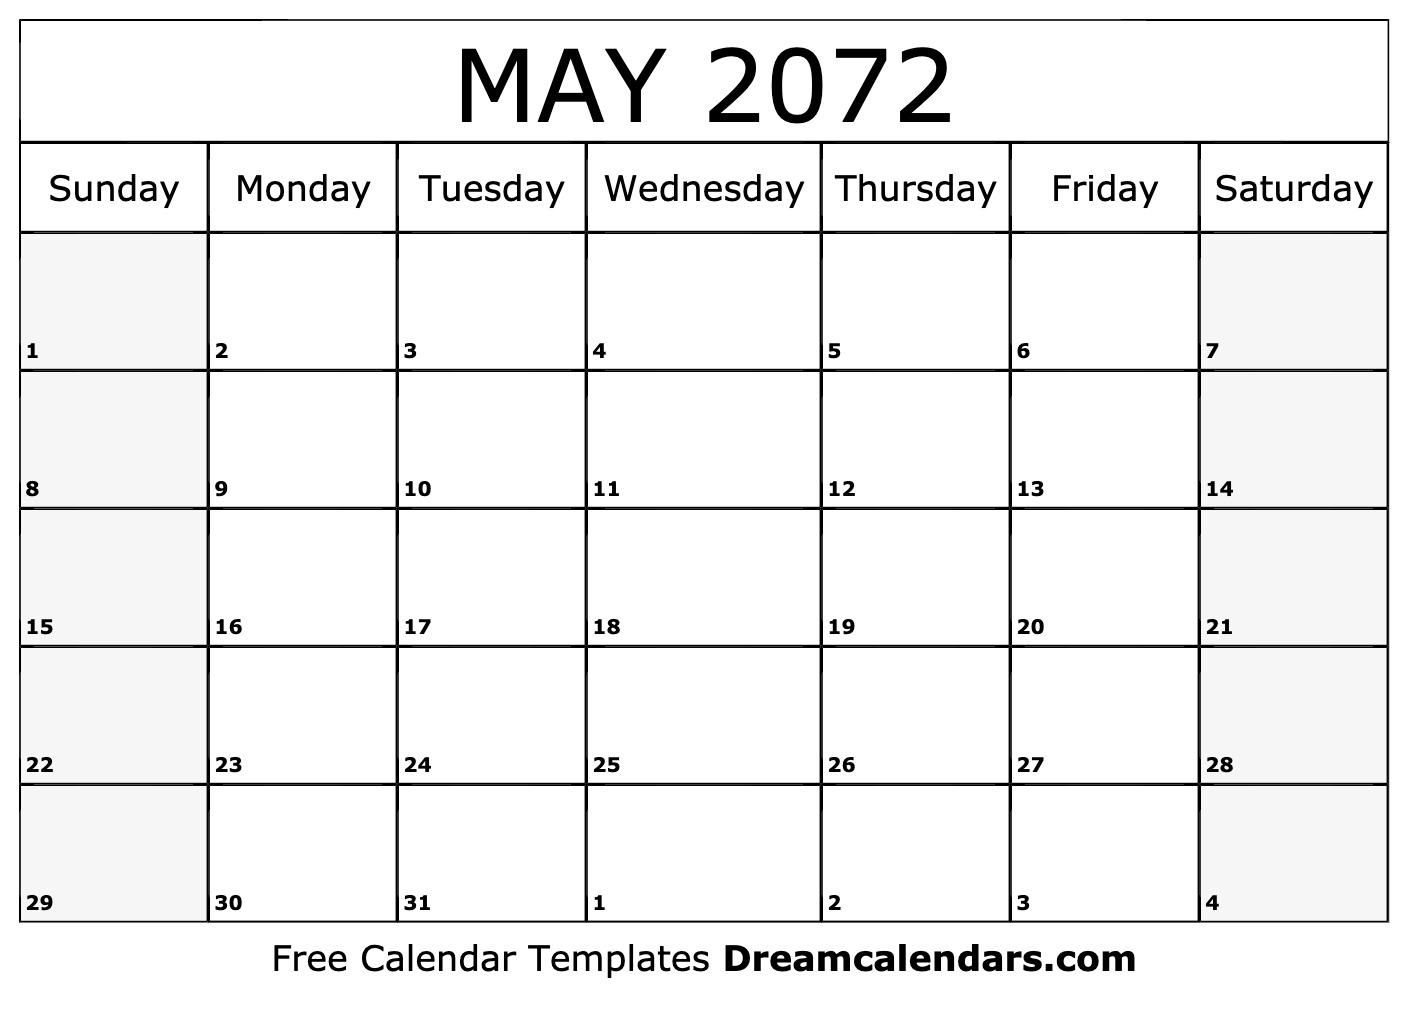 may-2072-calendar-free-blank-printable-with-holidays